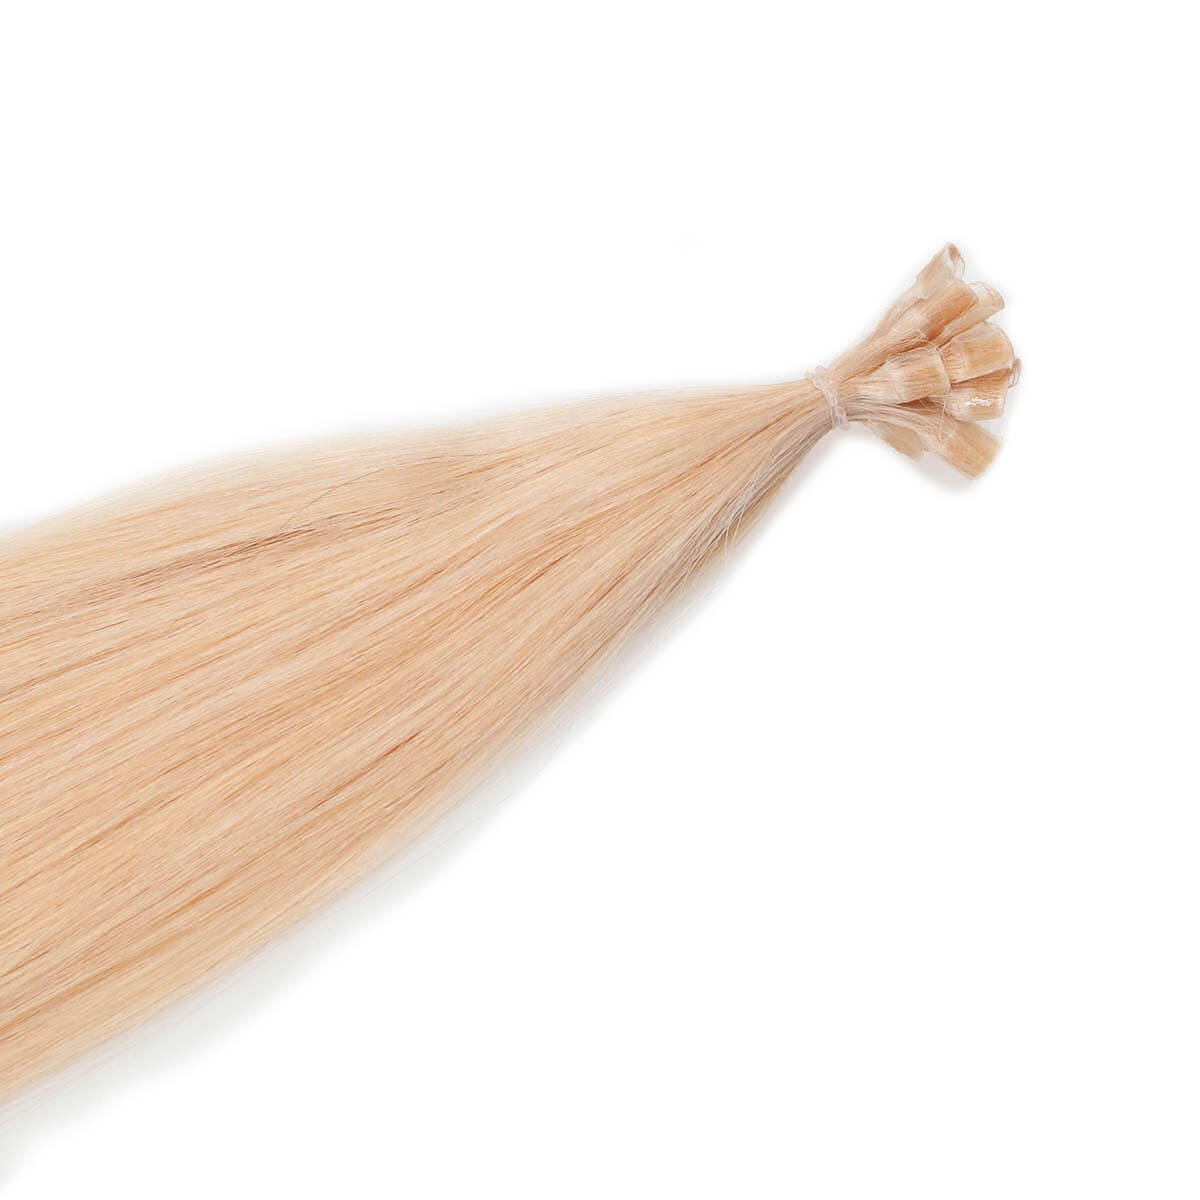 Nail Hair Premium 7.8 Strawberry Blonde 40 cm